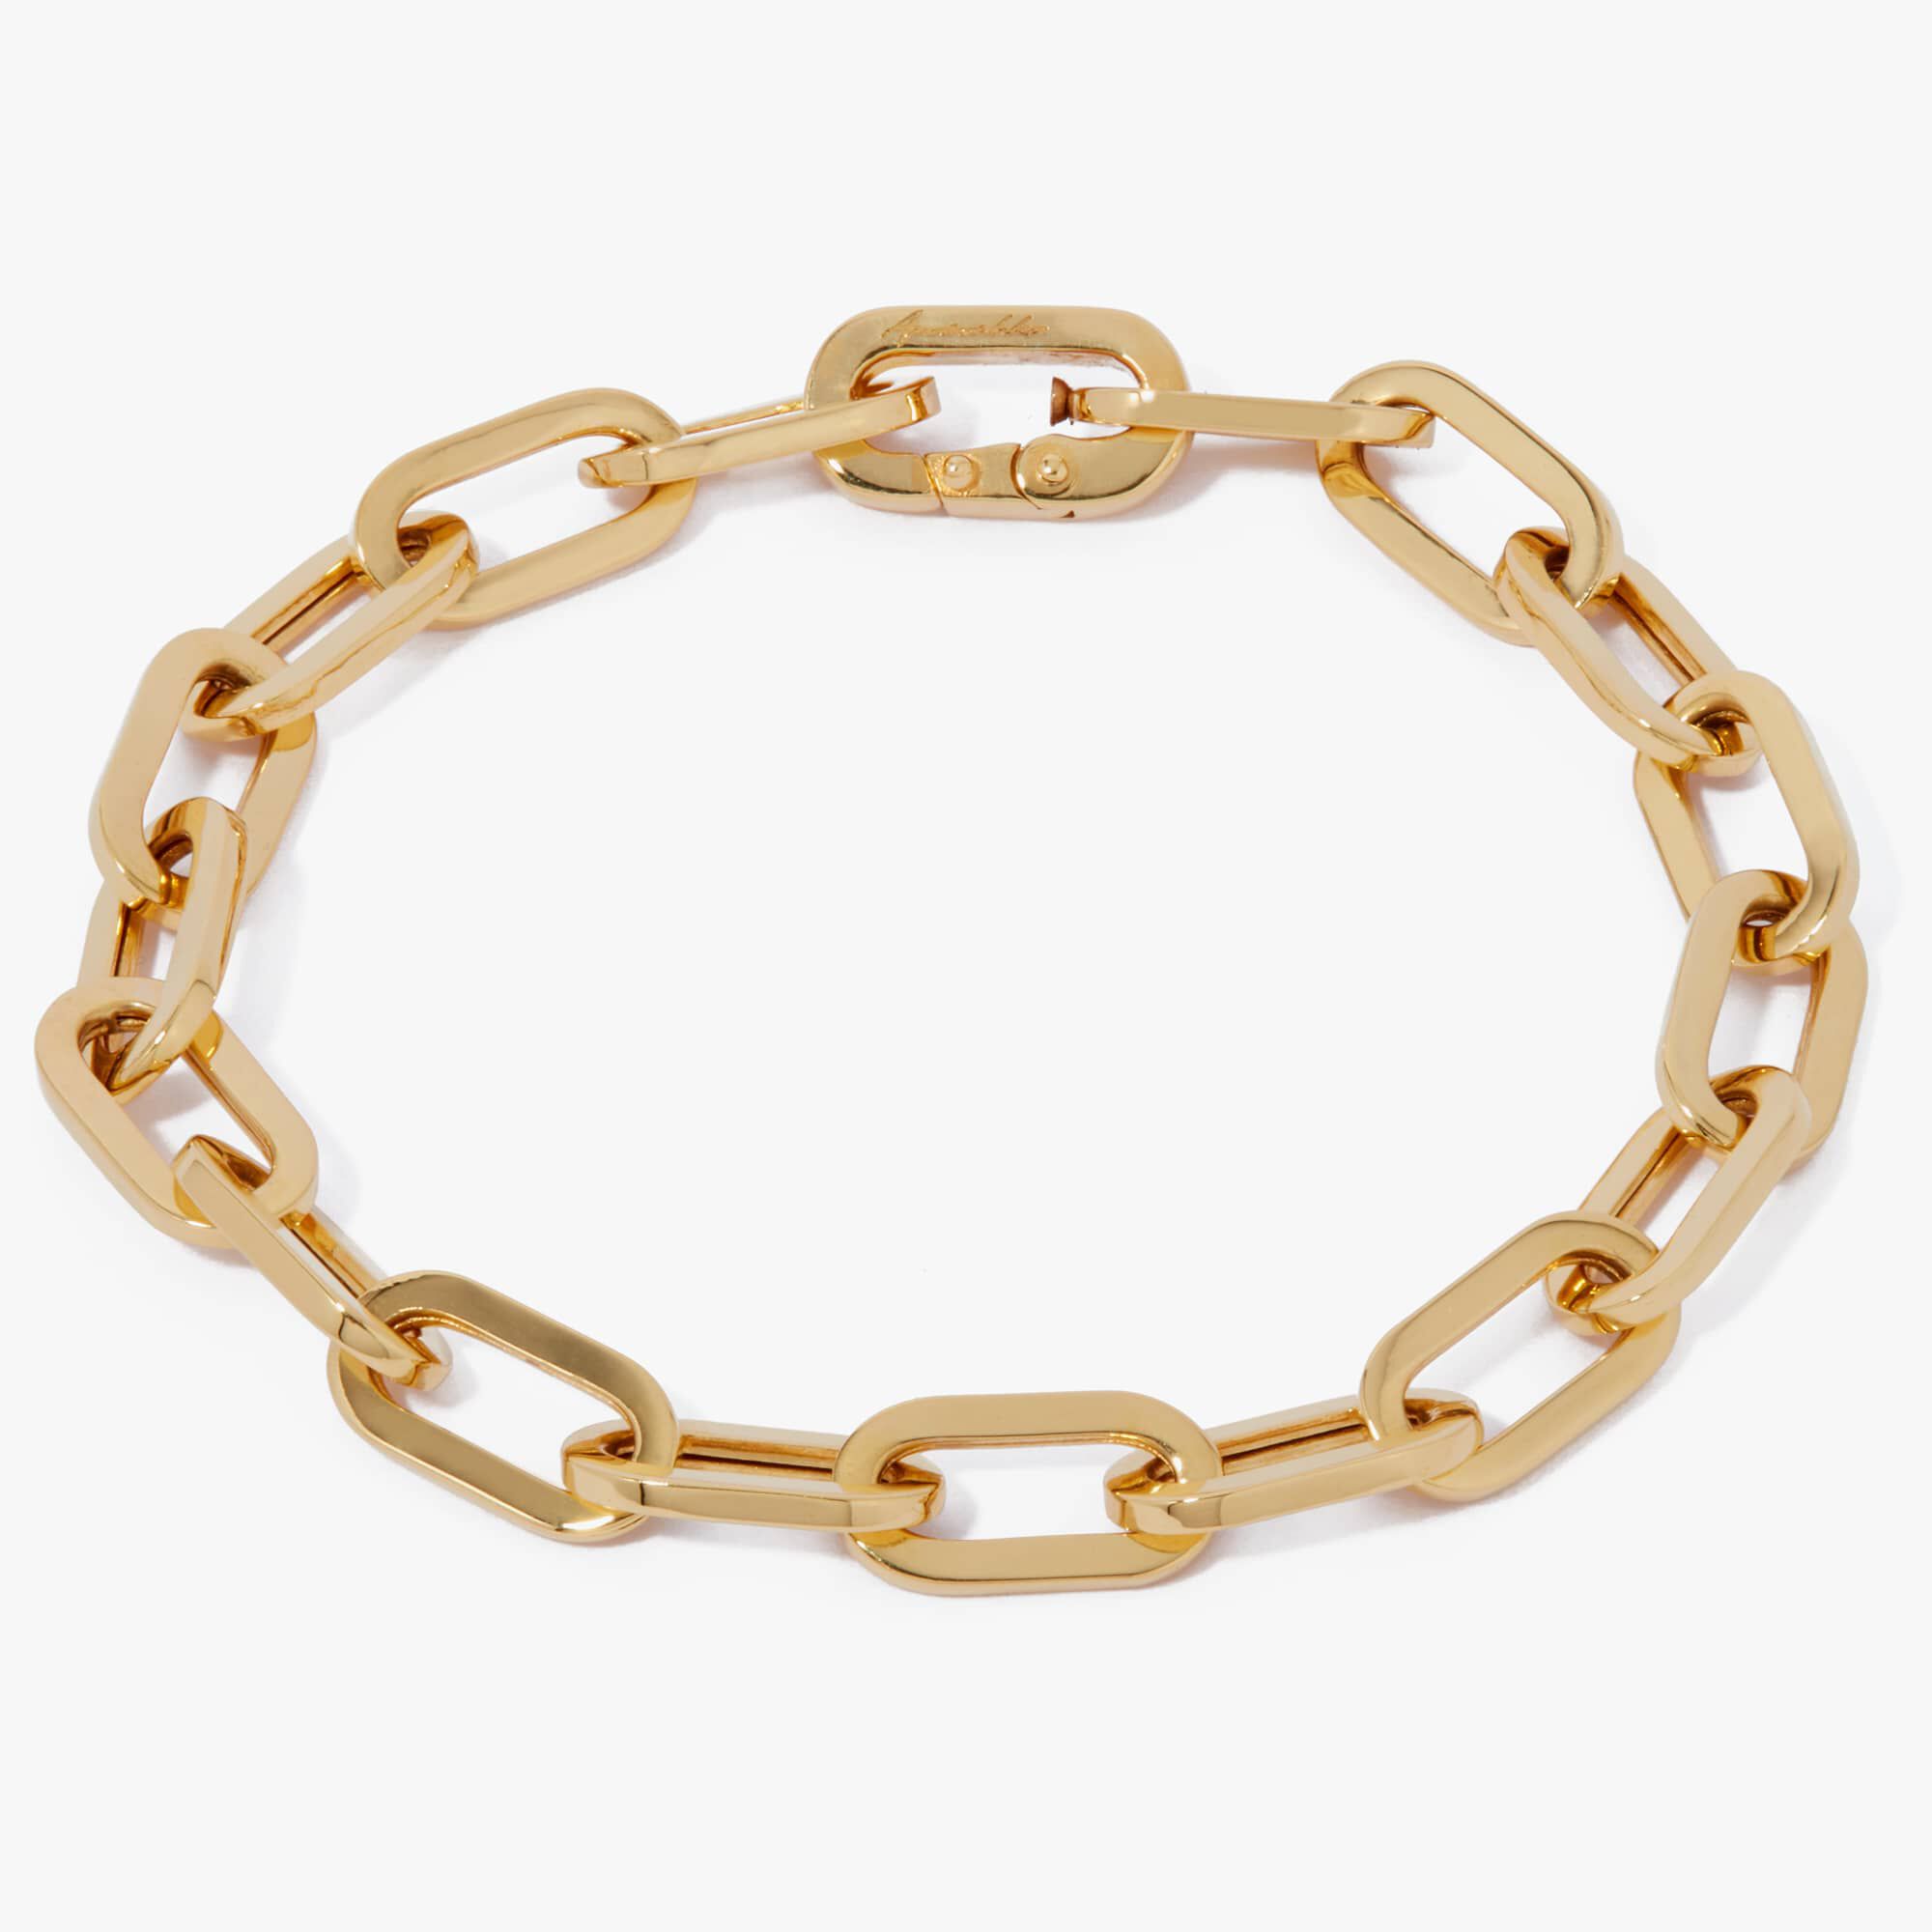 Annoushka 18ct Gold M Initial Bracelet